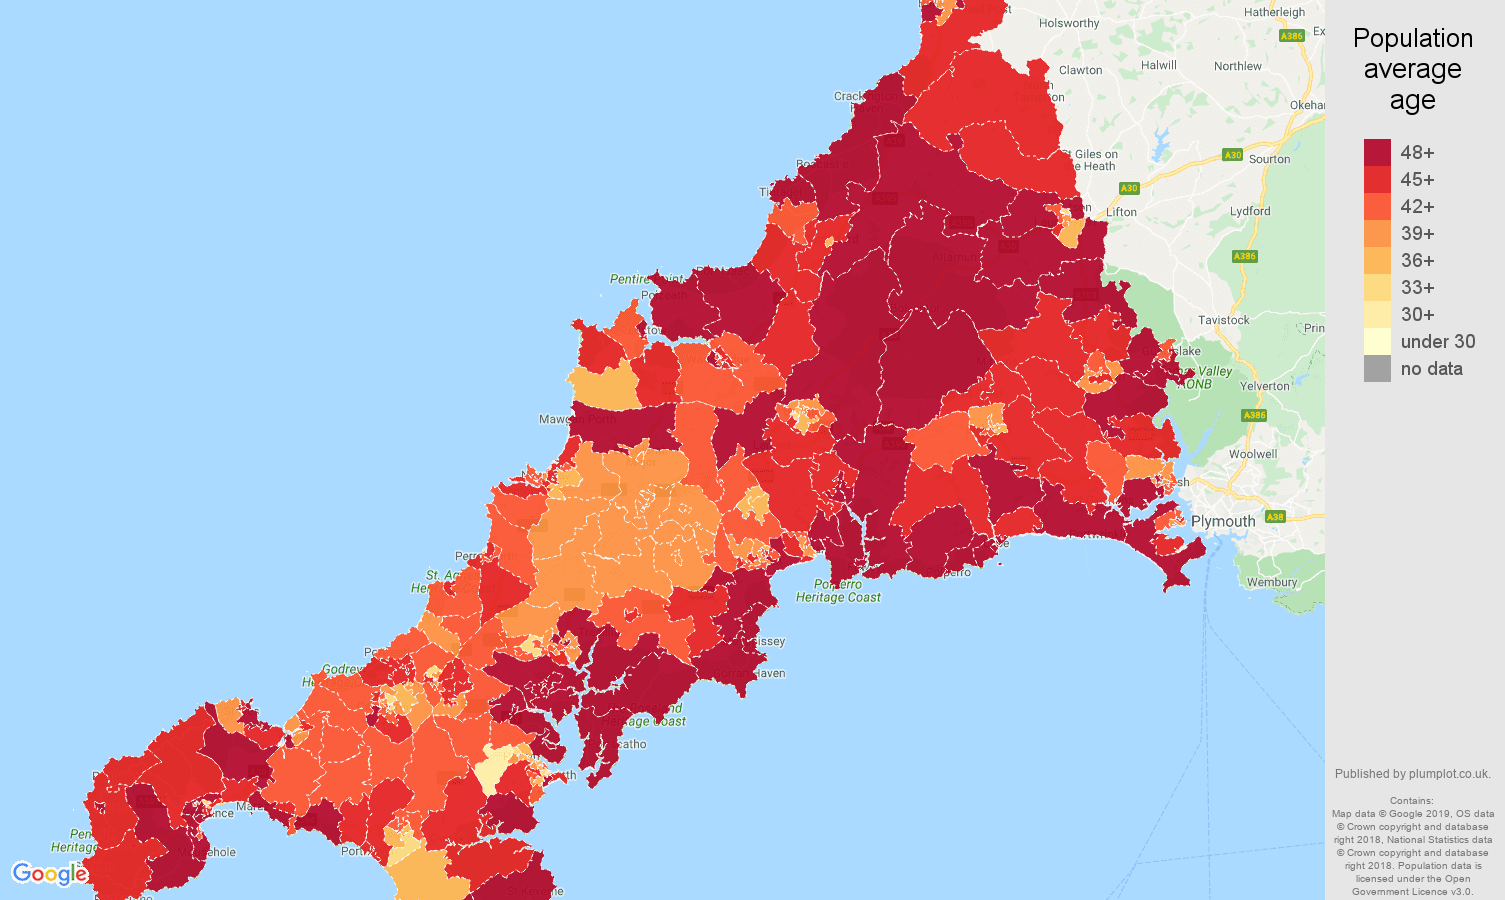 Cornwall population average age map